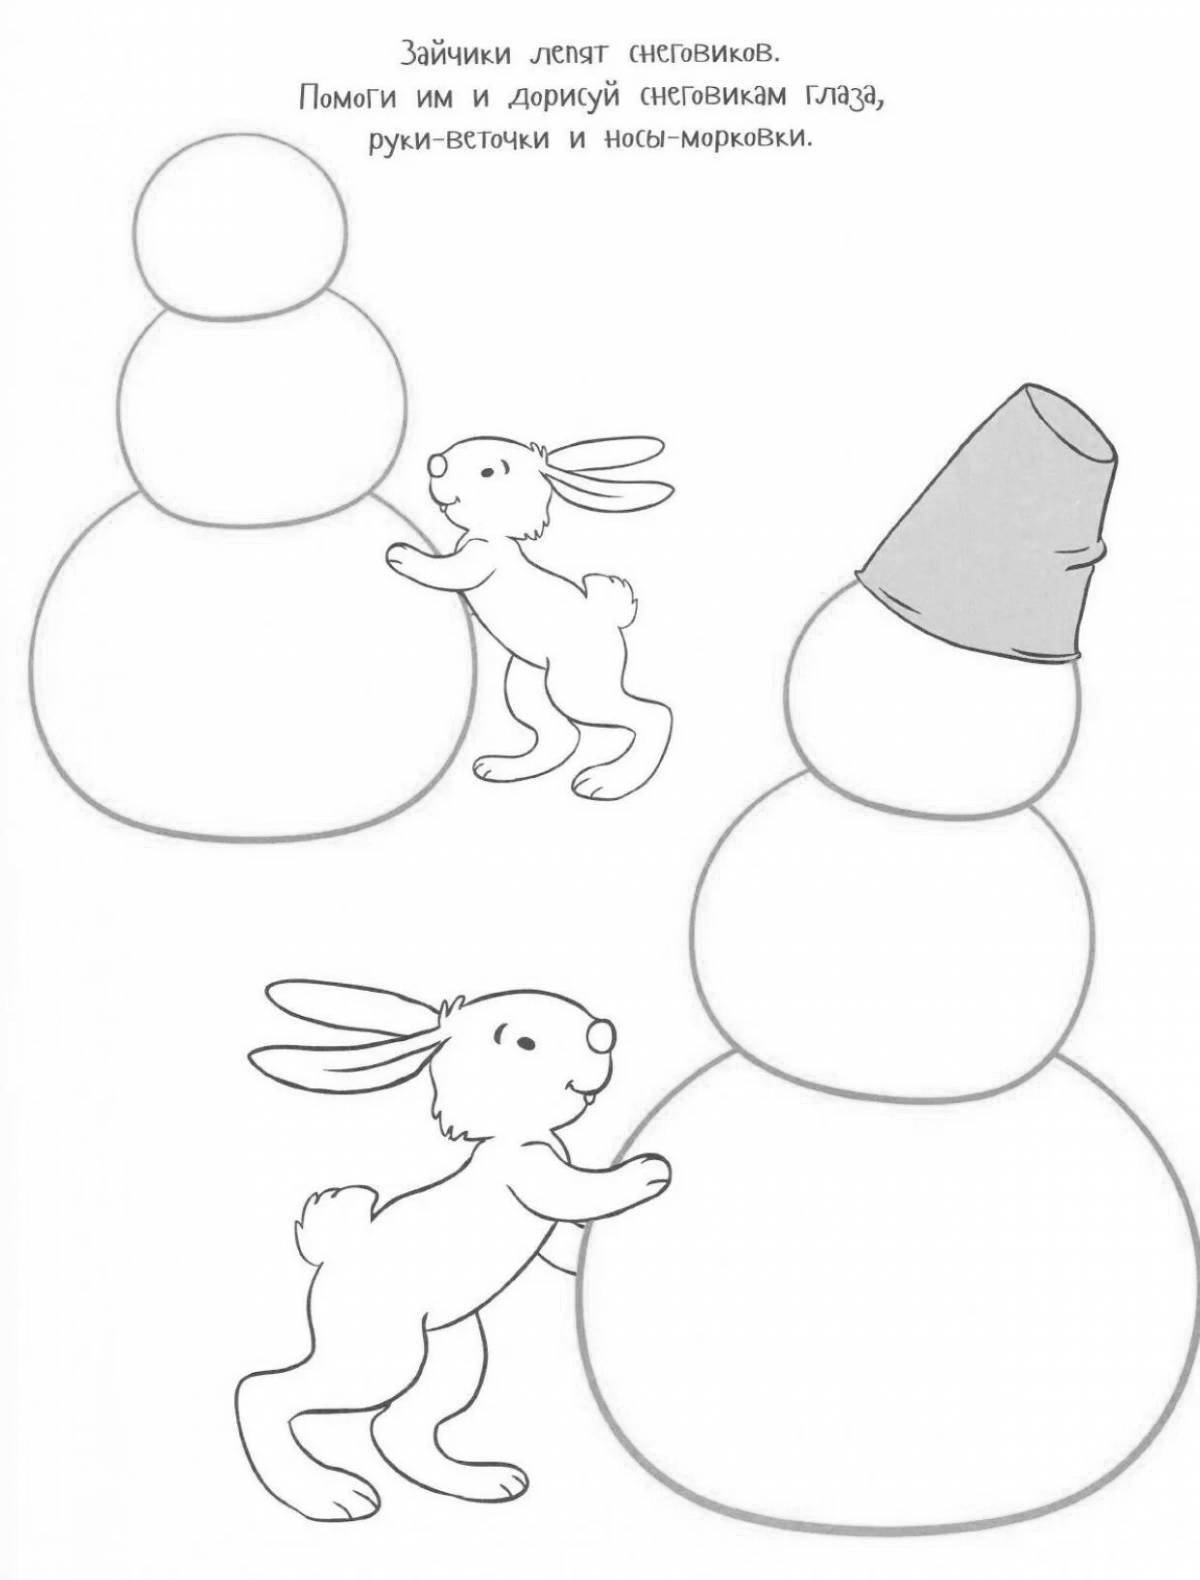 Снеговик - ладошками. Рисование ладошками. Как нарисовать снеговика | paraskevat.ru